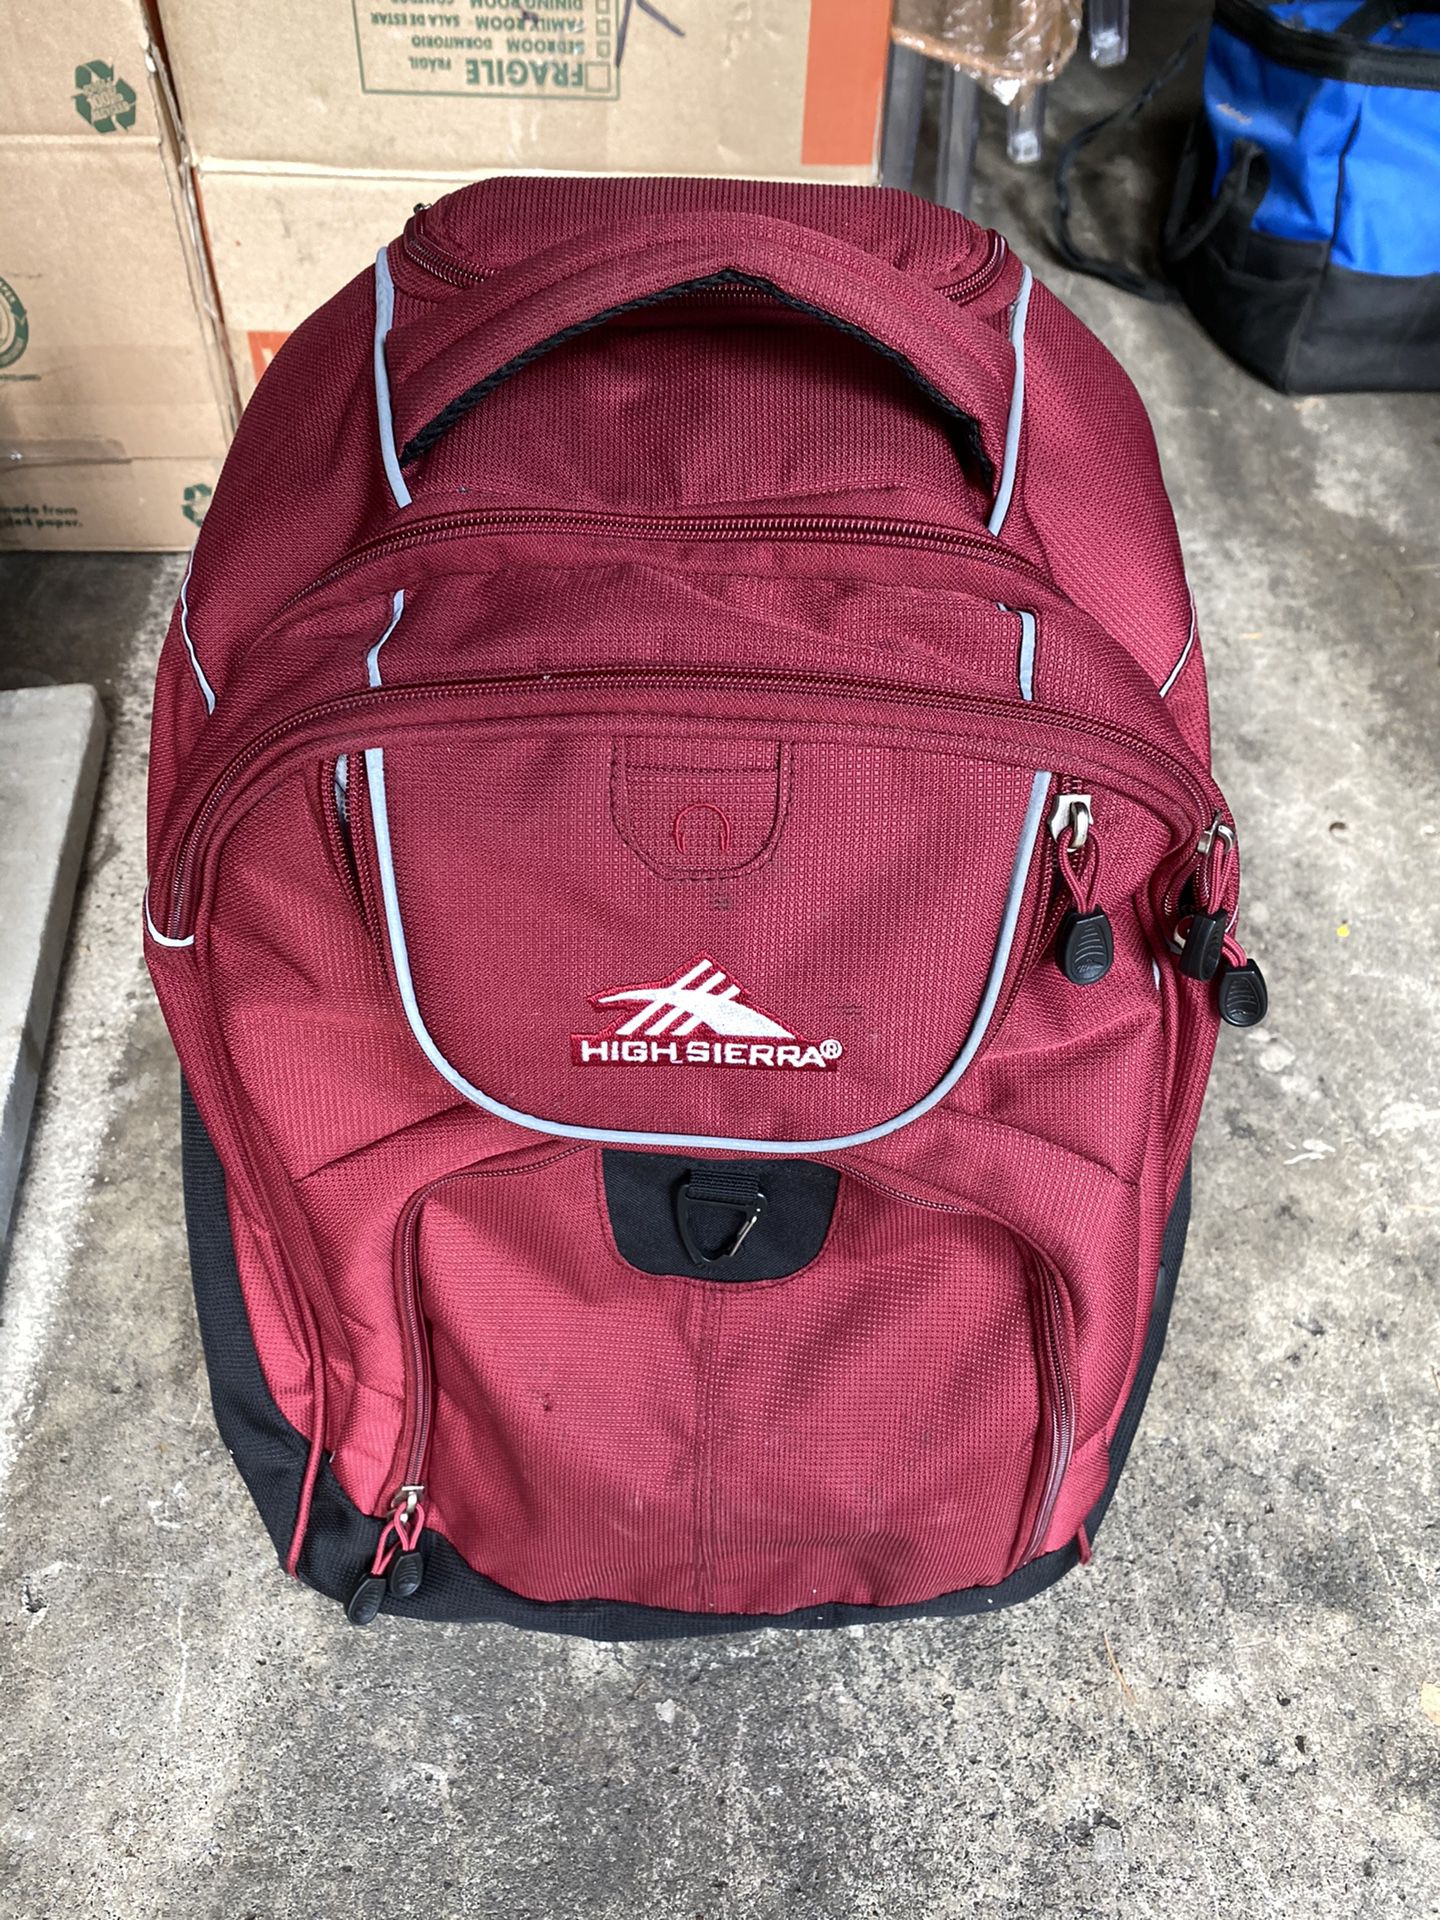 High Sierra travel backpack with wheels